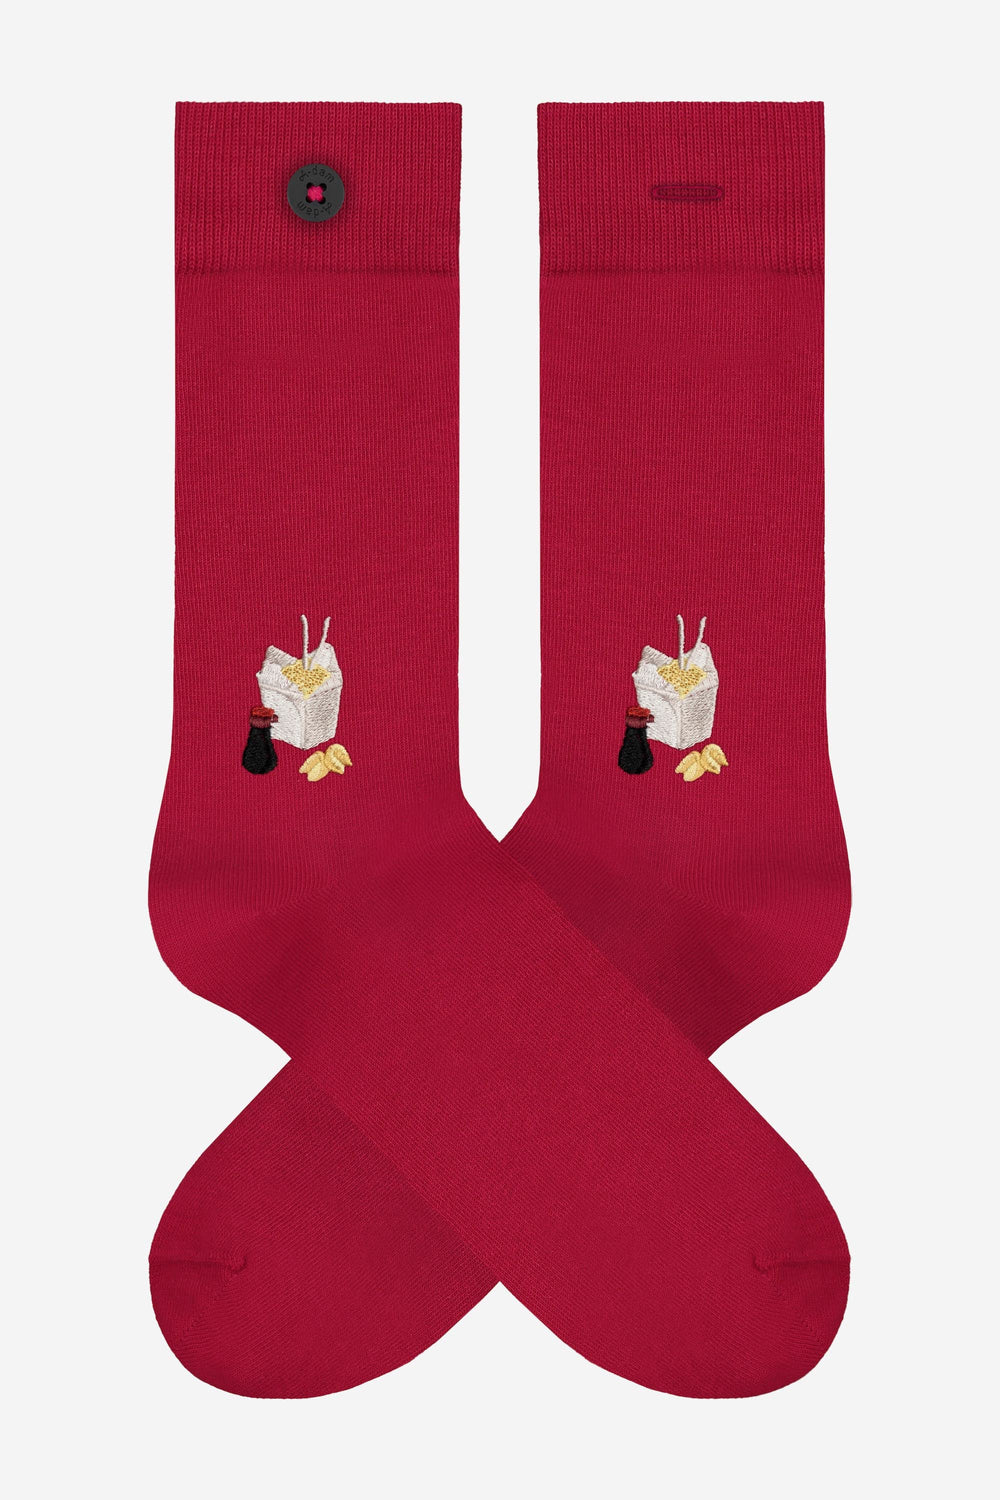 NUDELN Rote Socken